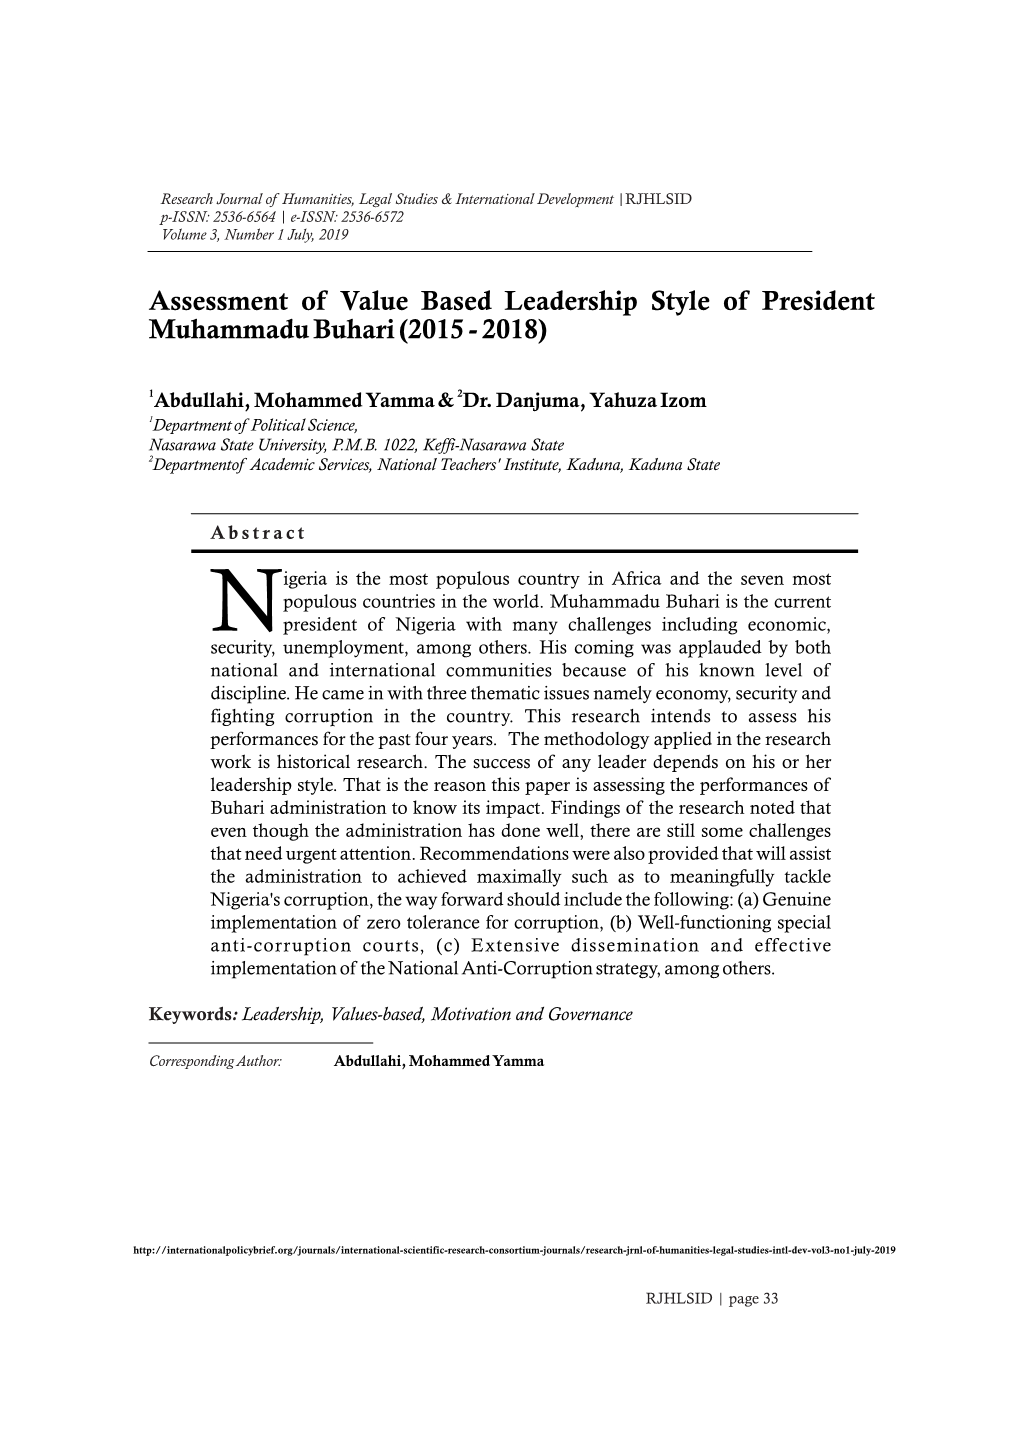 Assessment of Value Based Leadership Style of President Muhammadu Buhari (2015 - 2018)